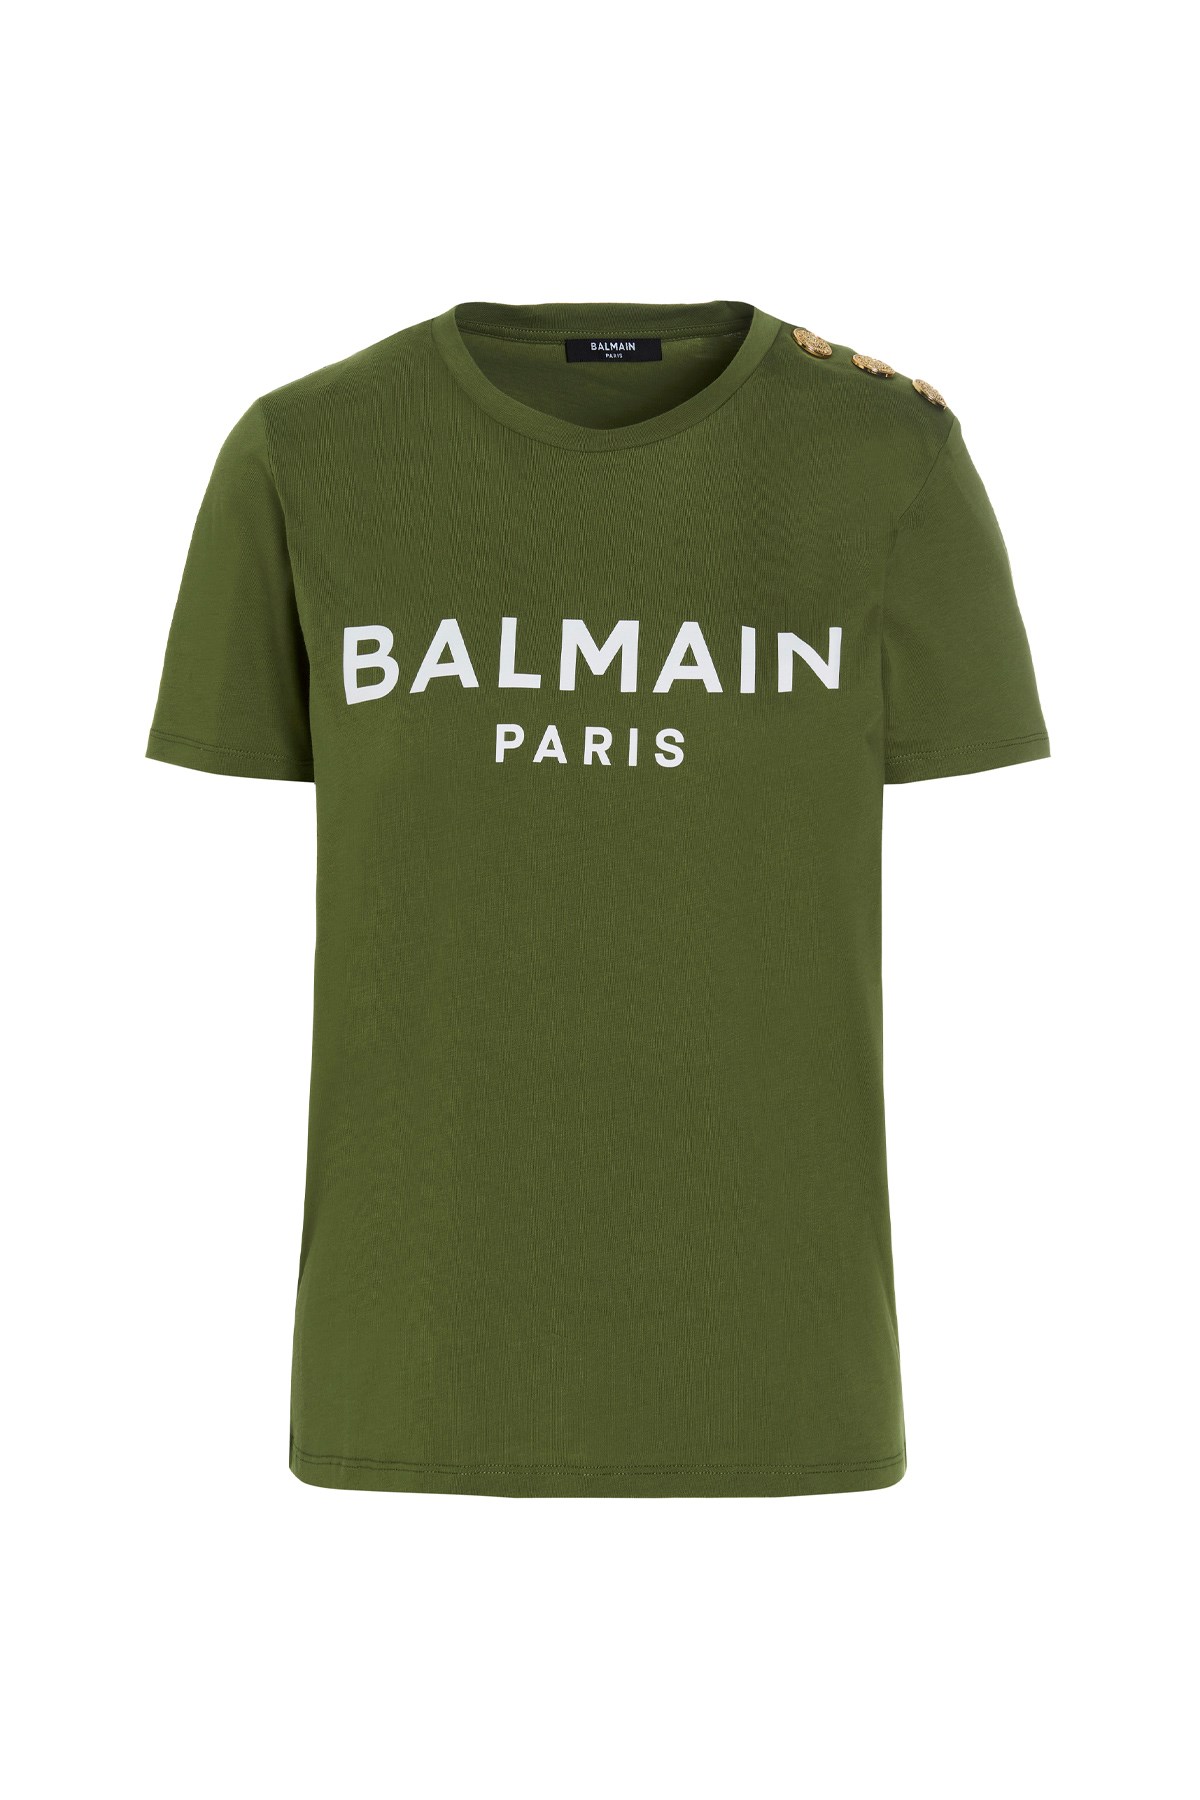 BALMAIN Logo And Gold Button T-Shirt